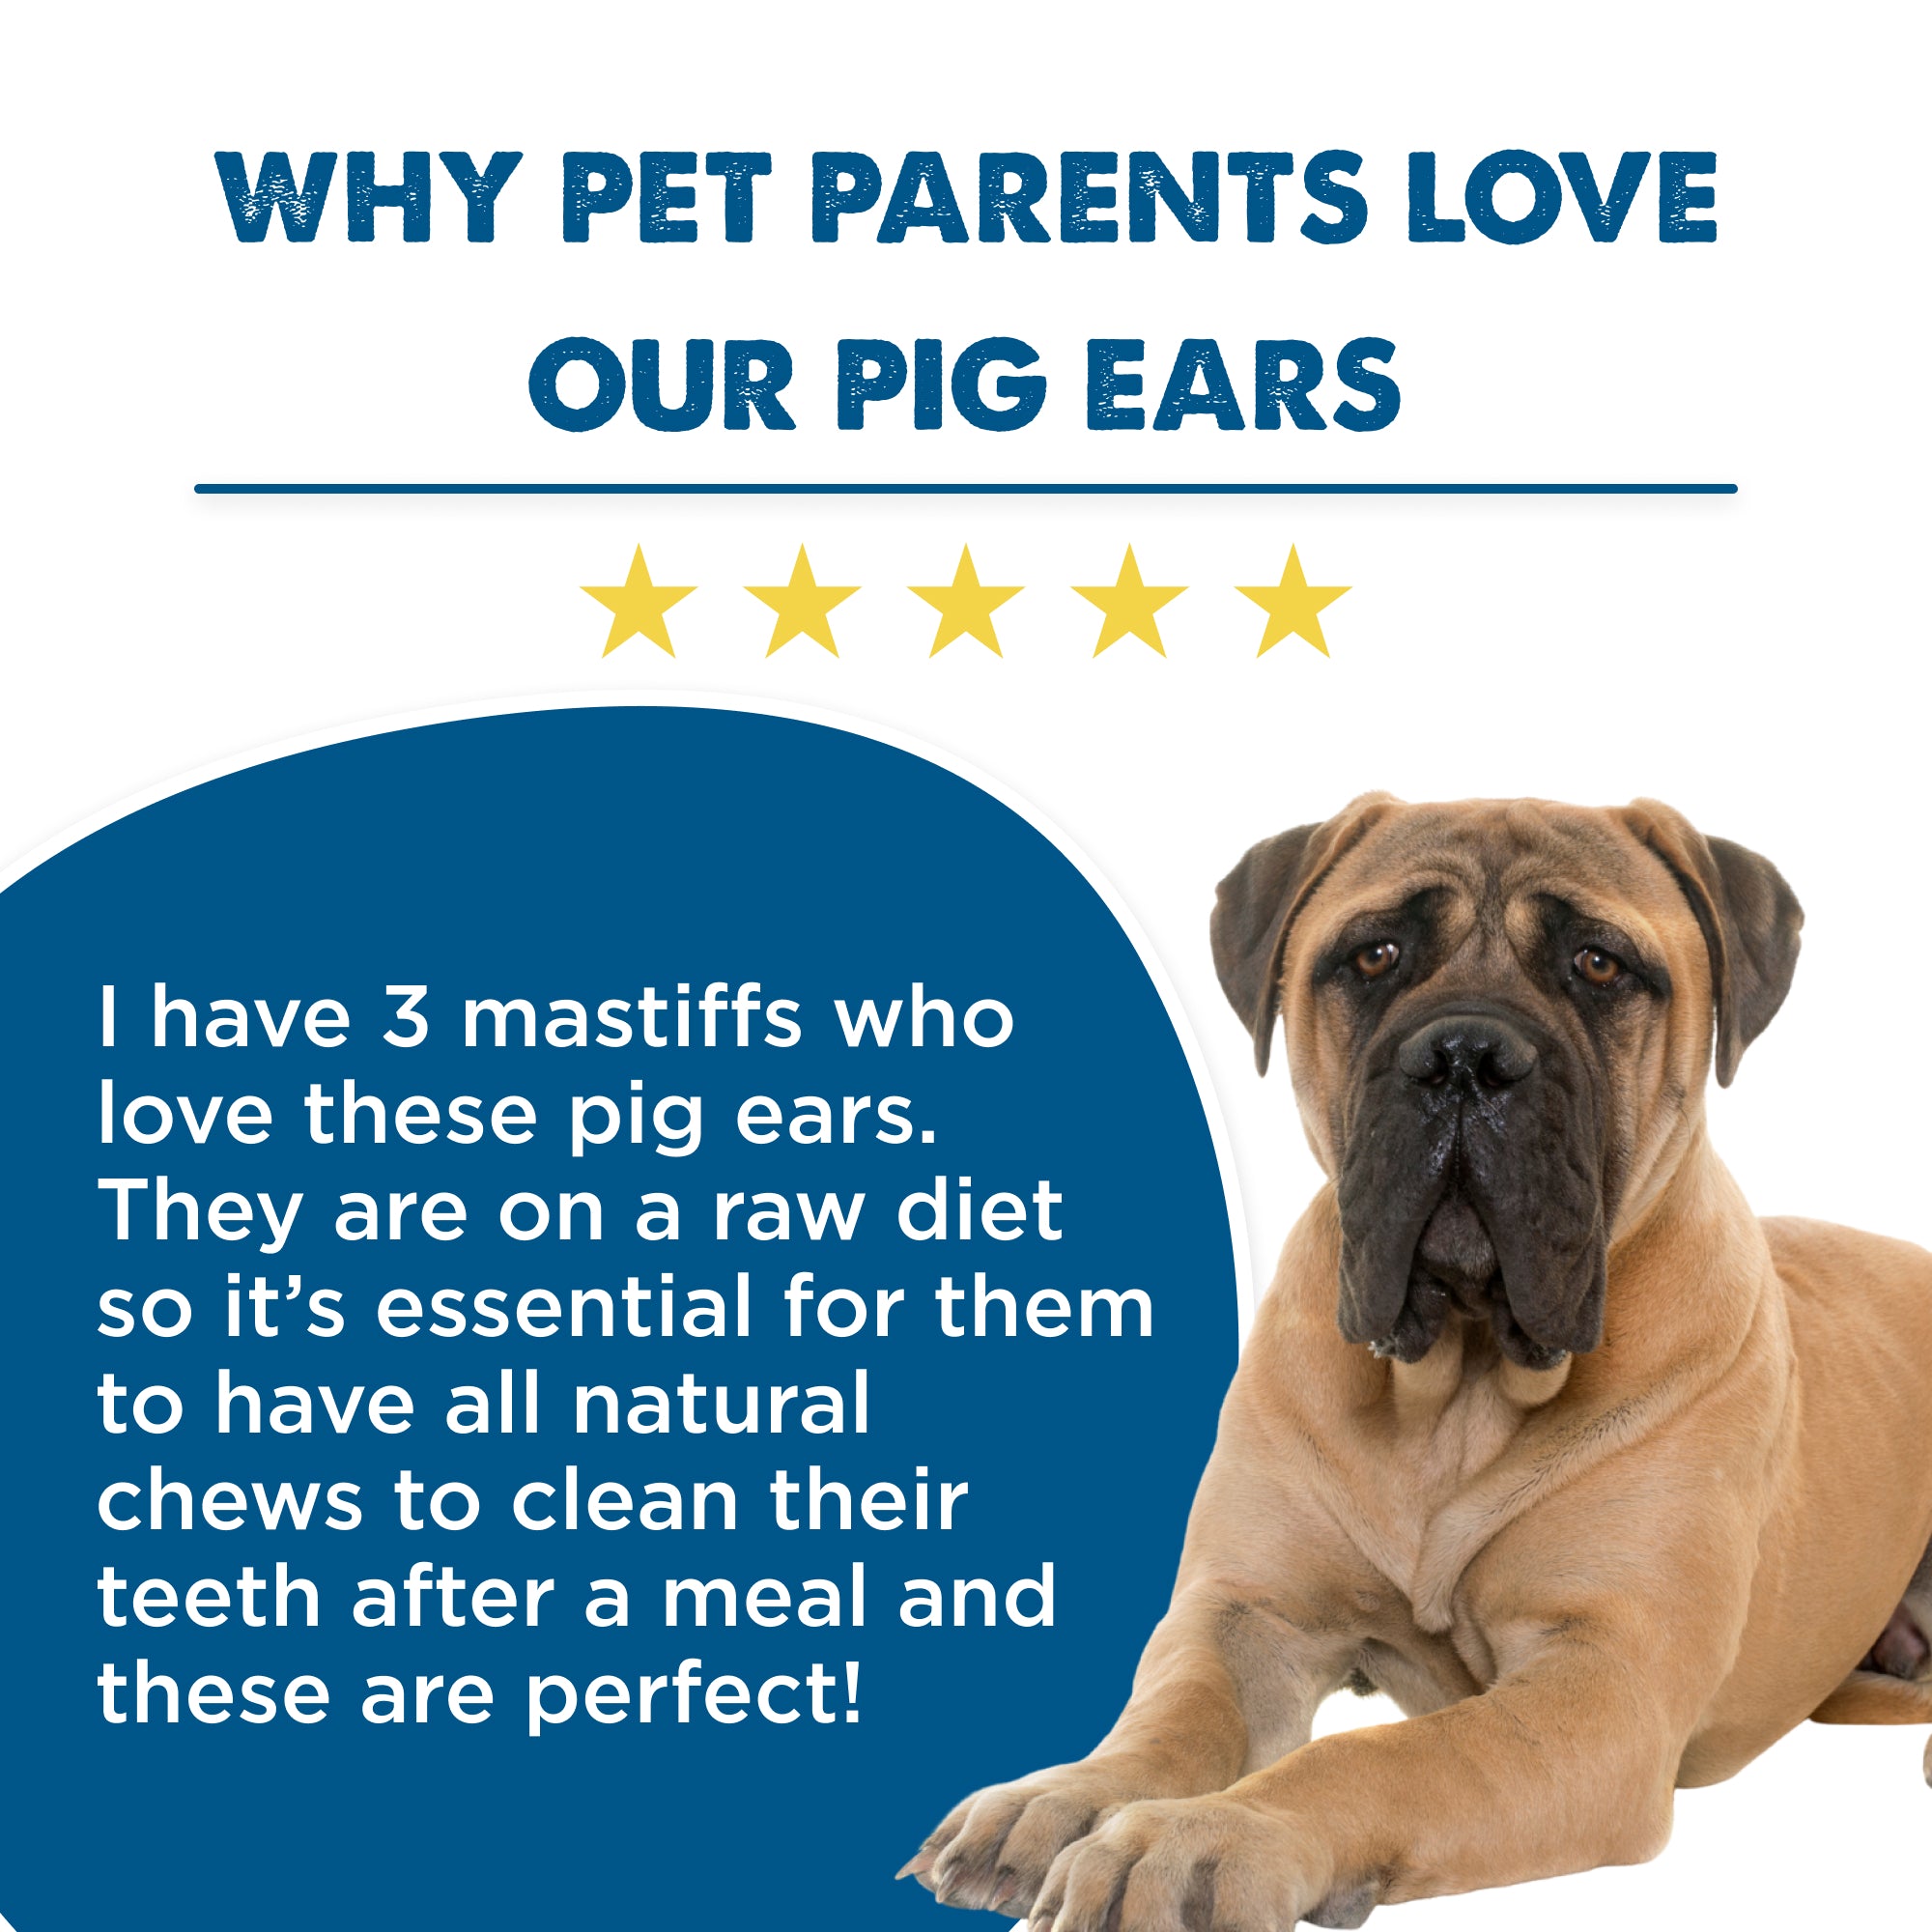 are pig ears better for a campeiro bulldog than rawhide ears